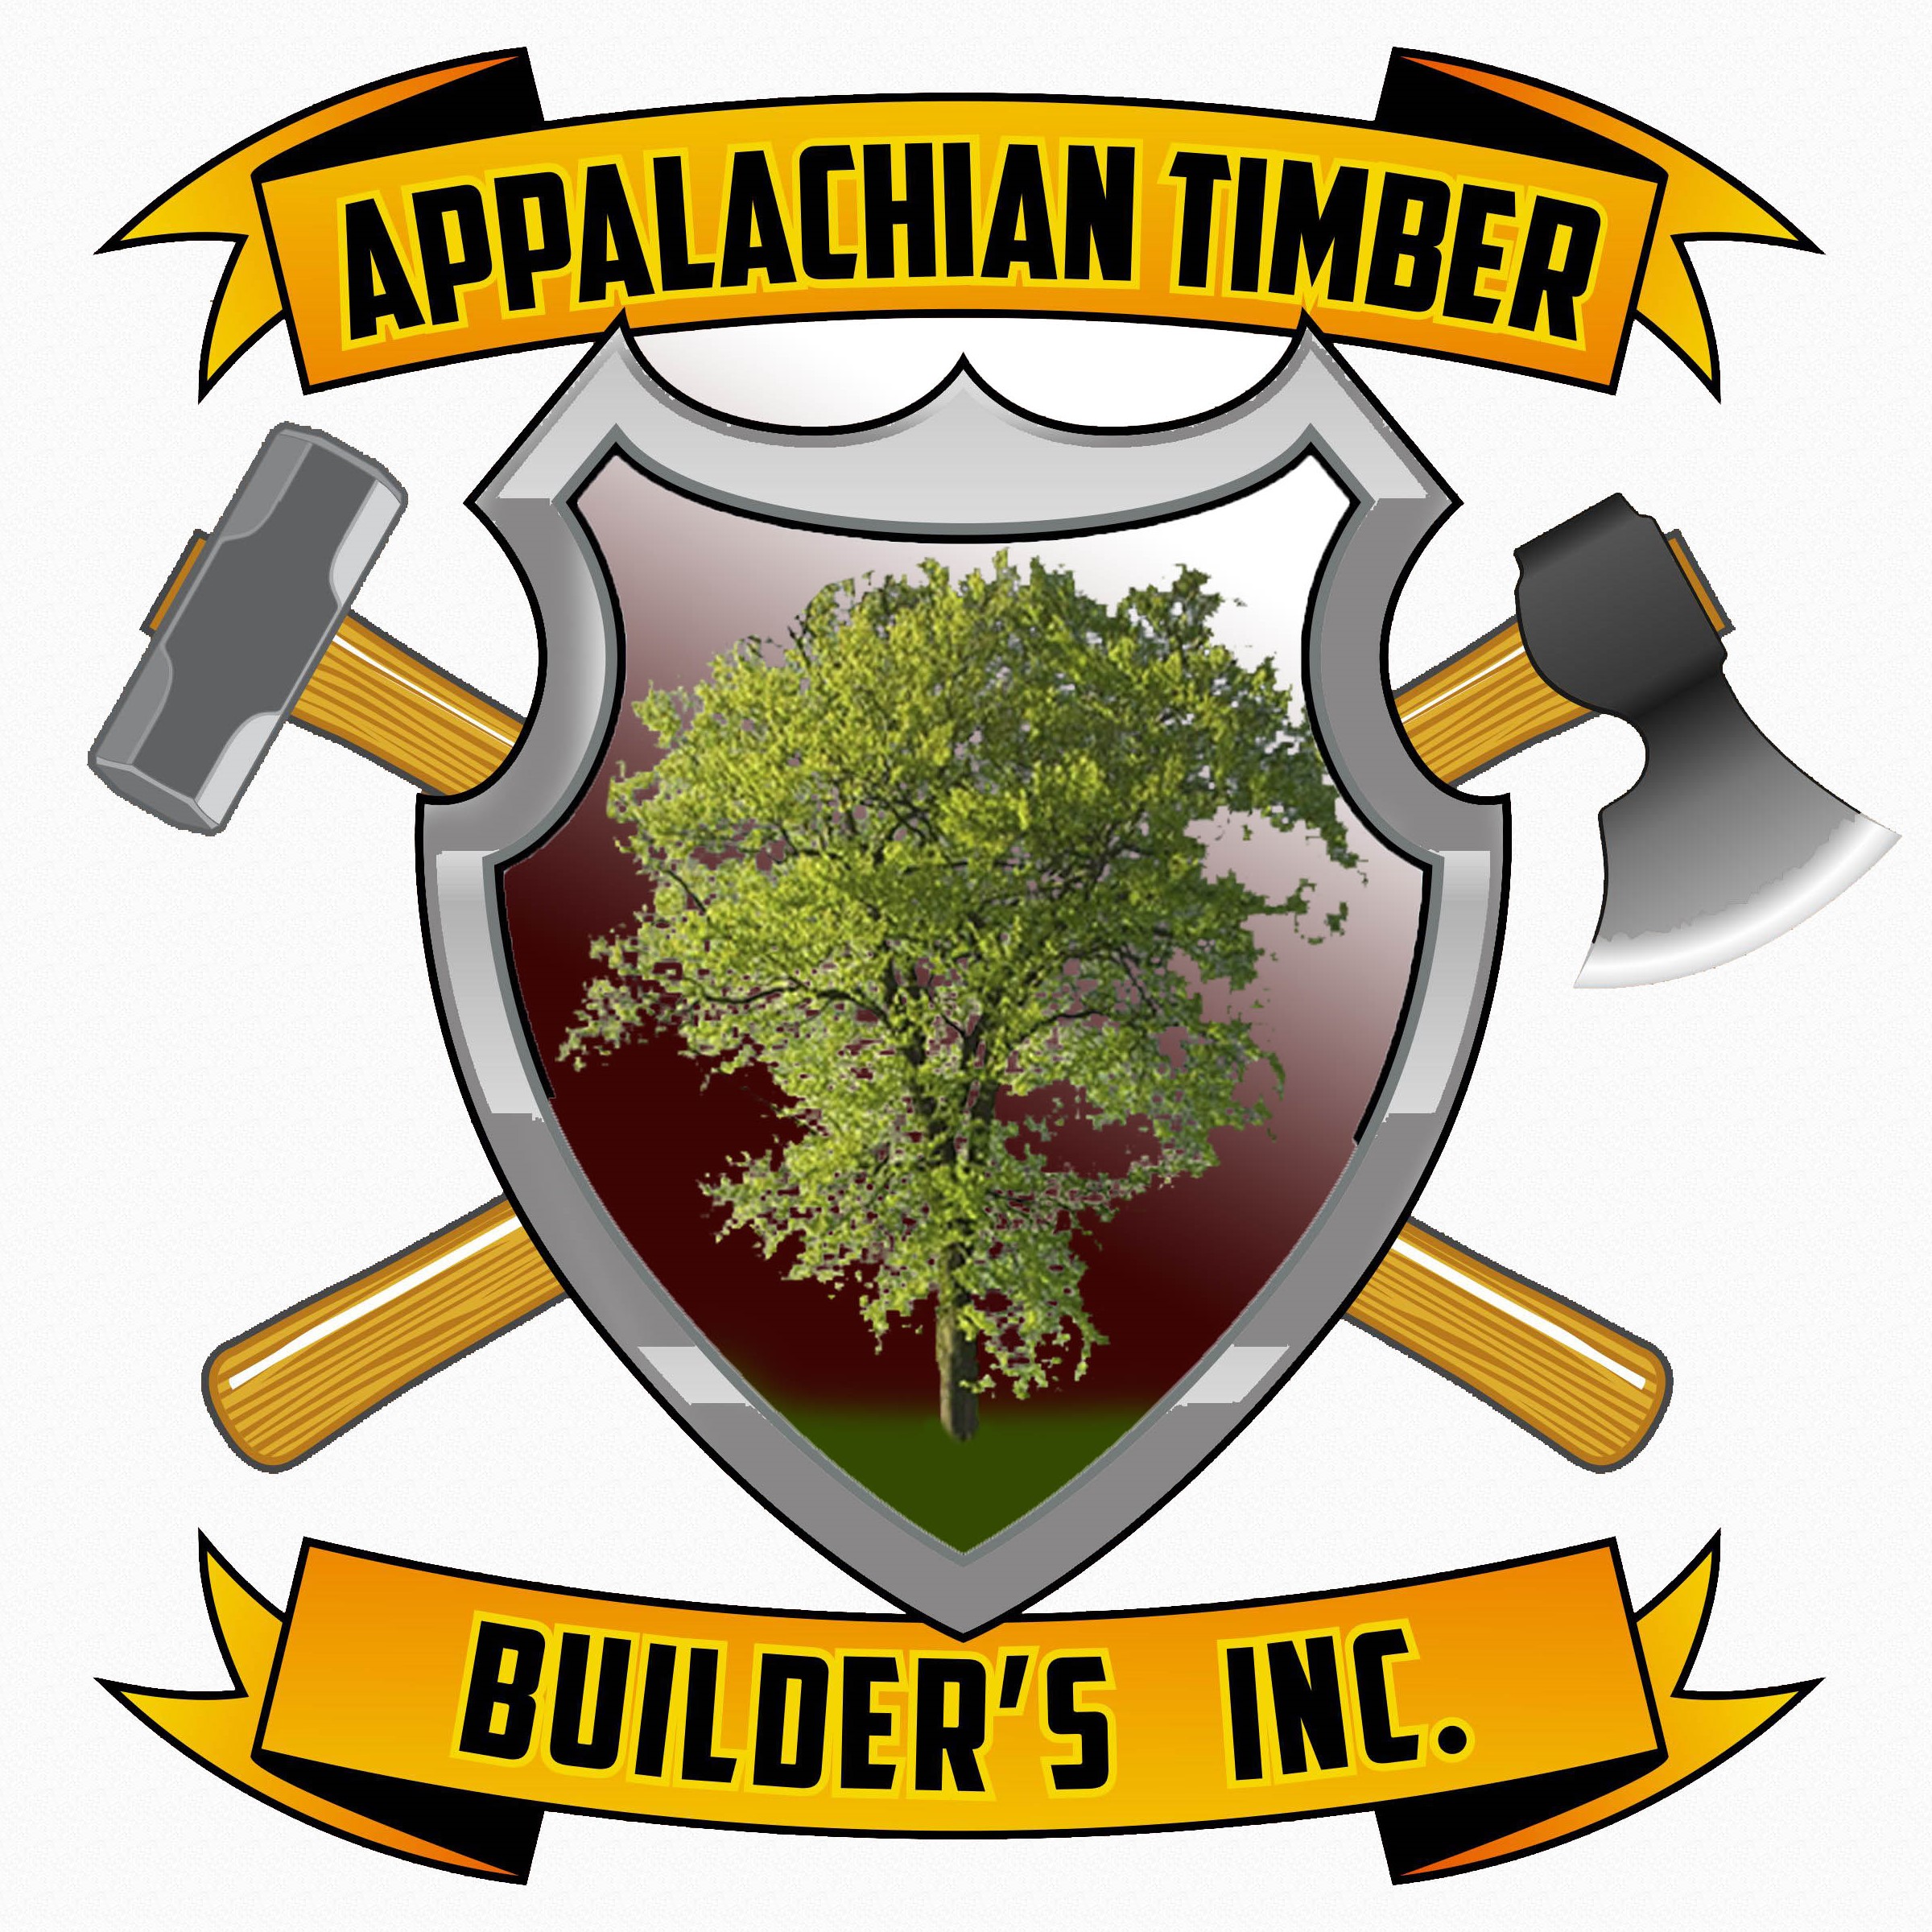 Appalachian Timber Builders Inc,